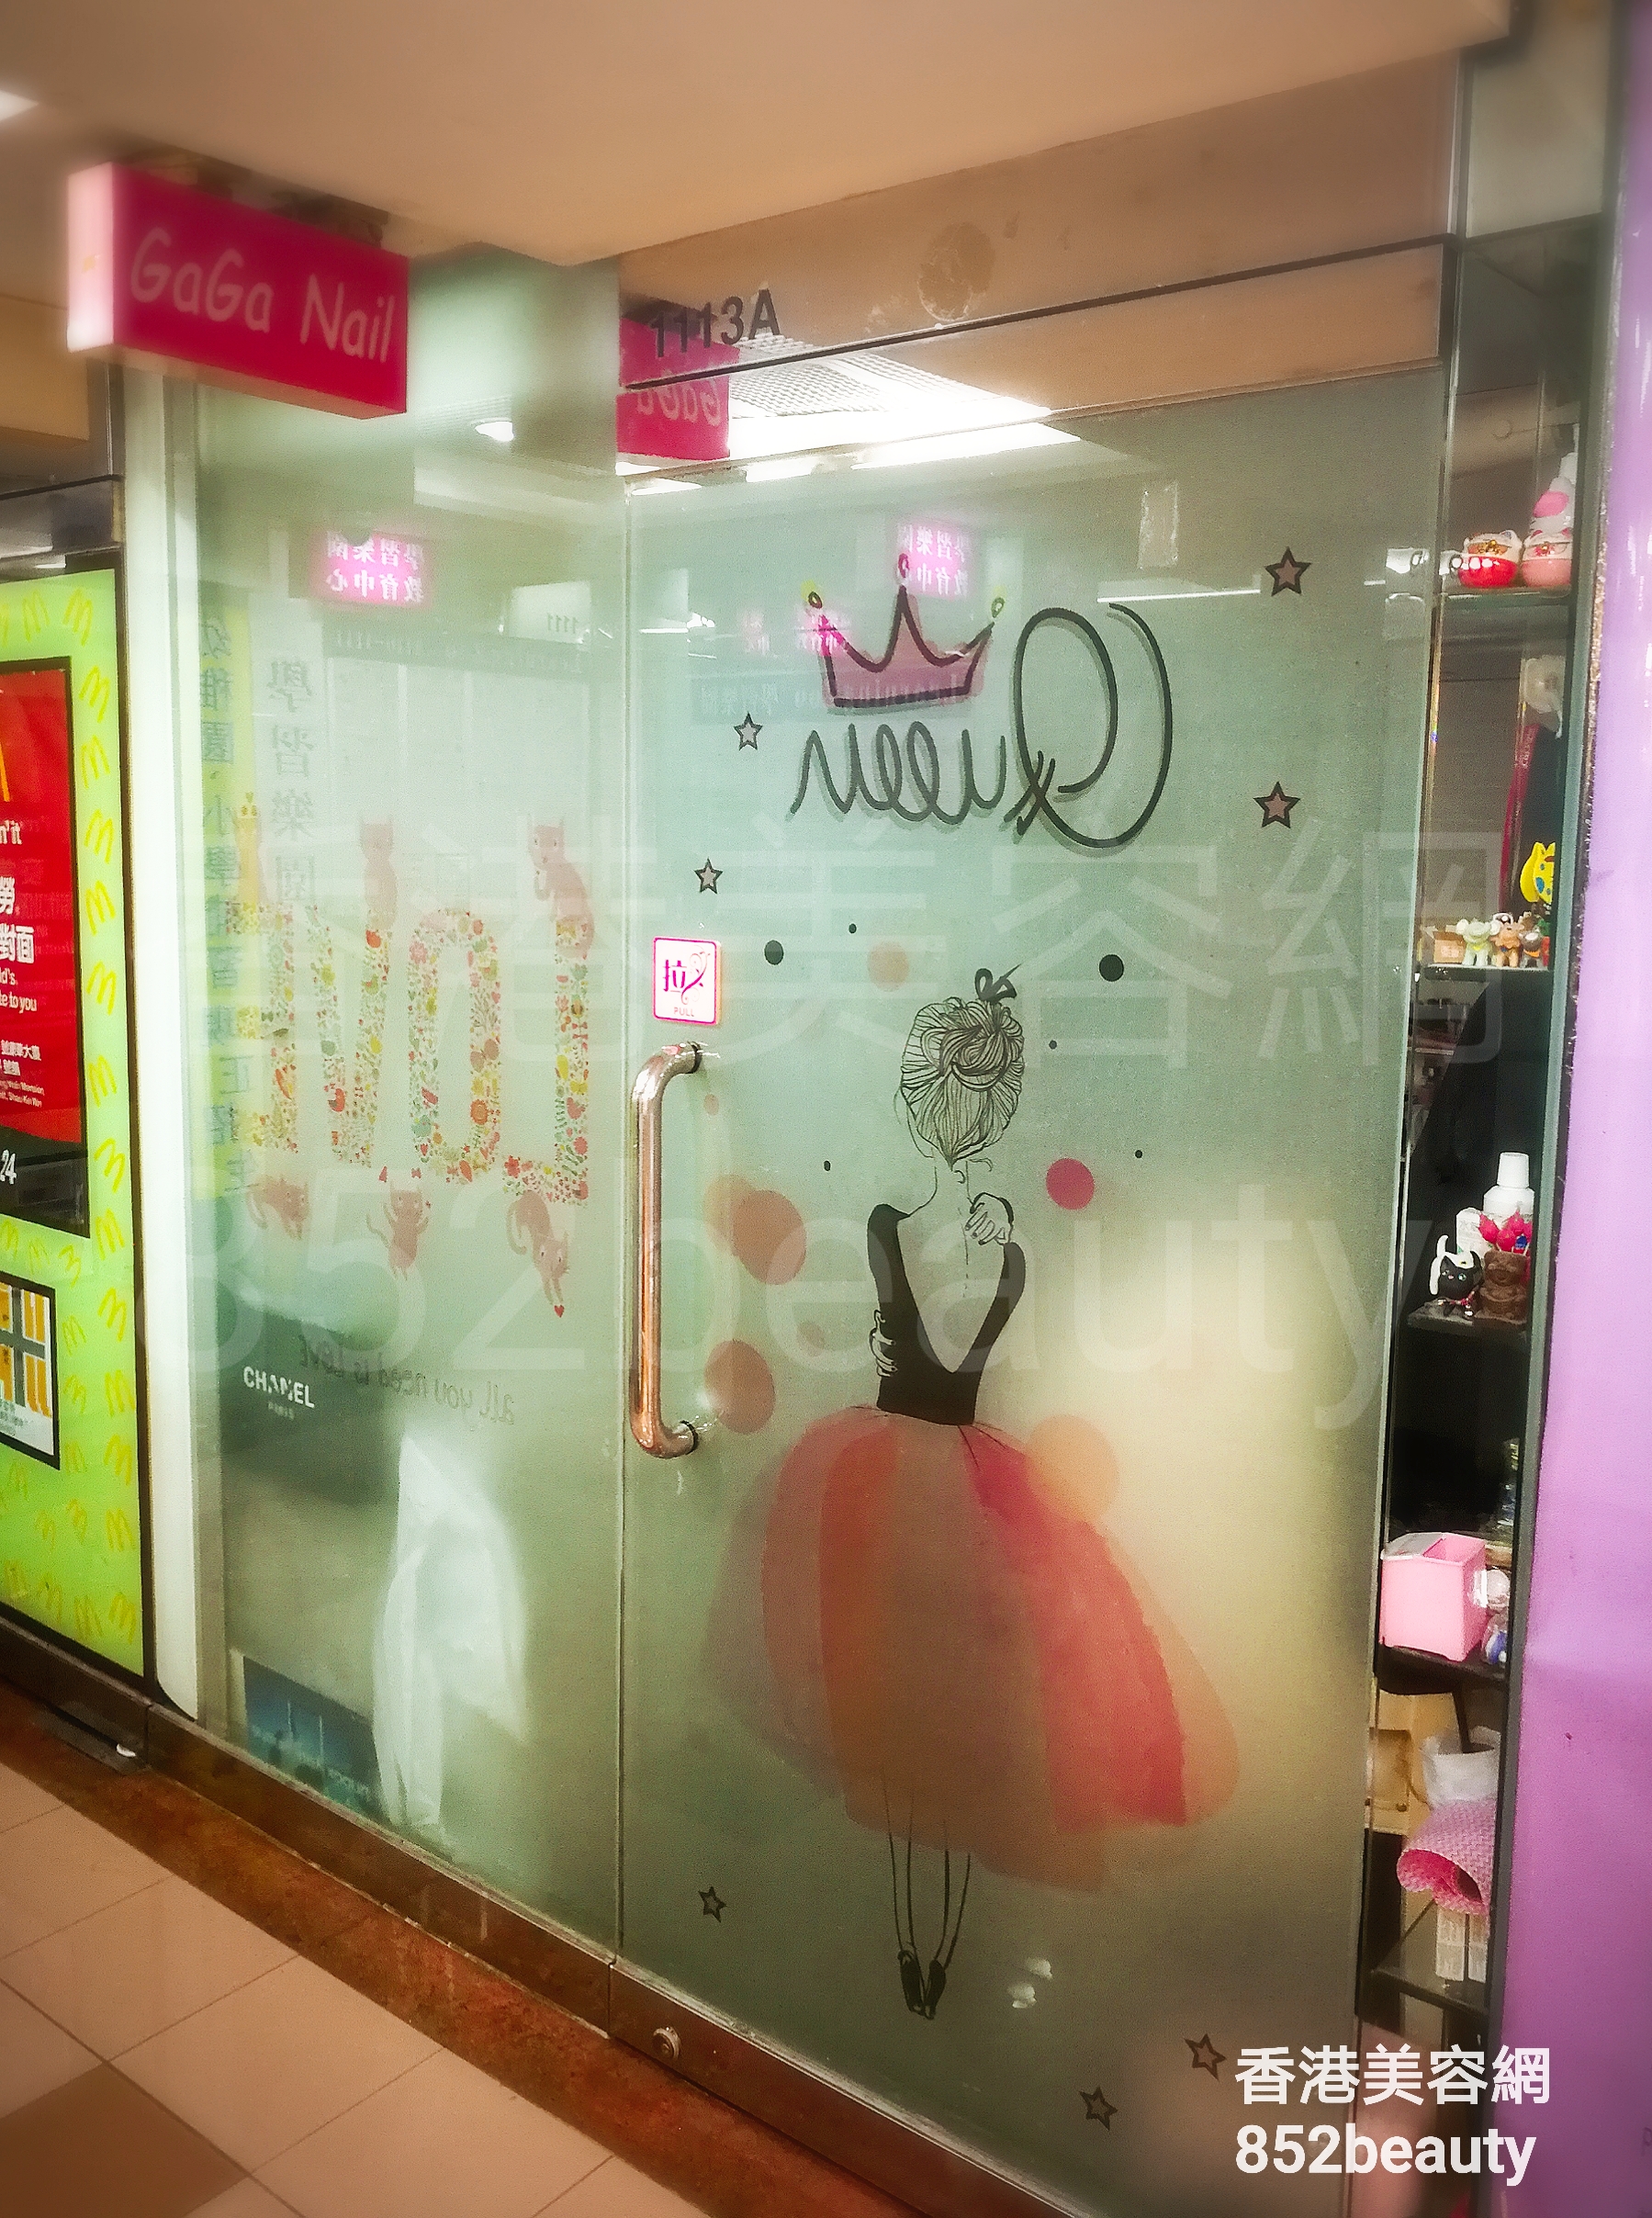 香港美容網 Hong Kong Beauty Salon 美容院 / 美容師: GaGa Nail